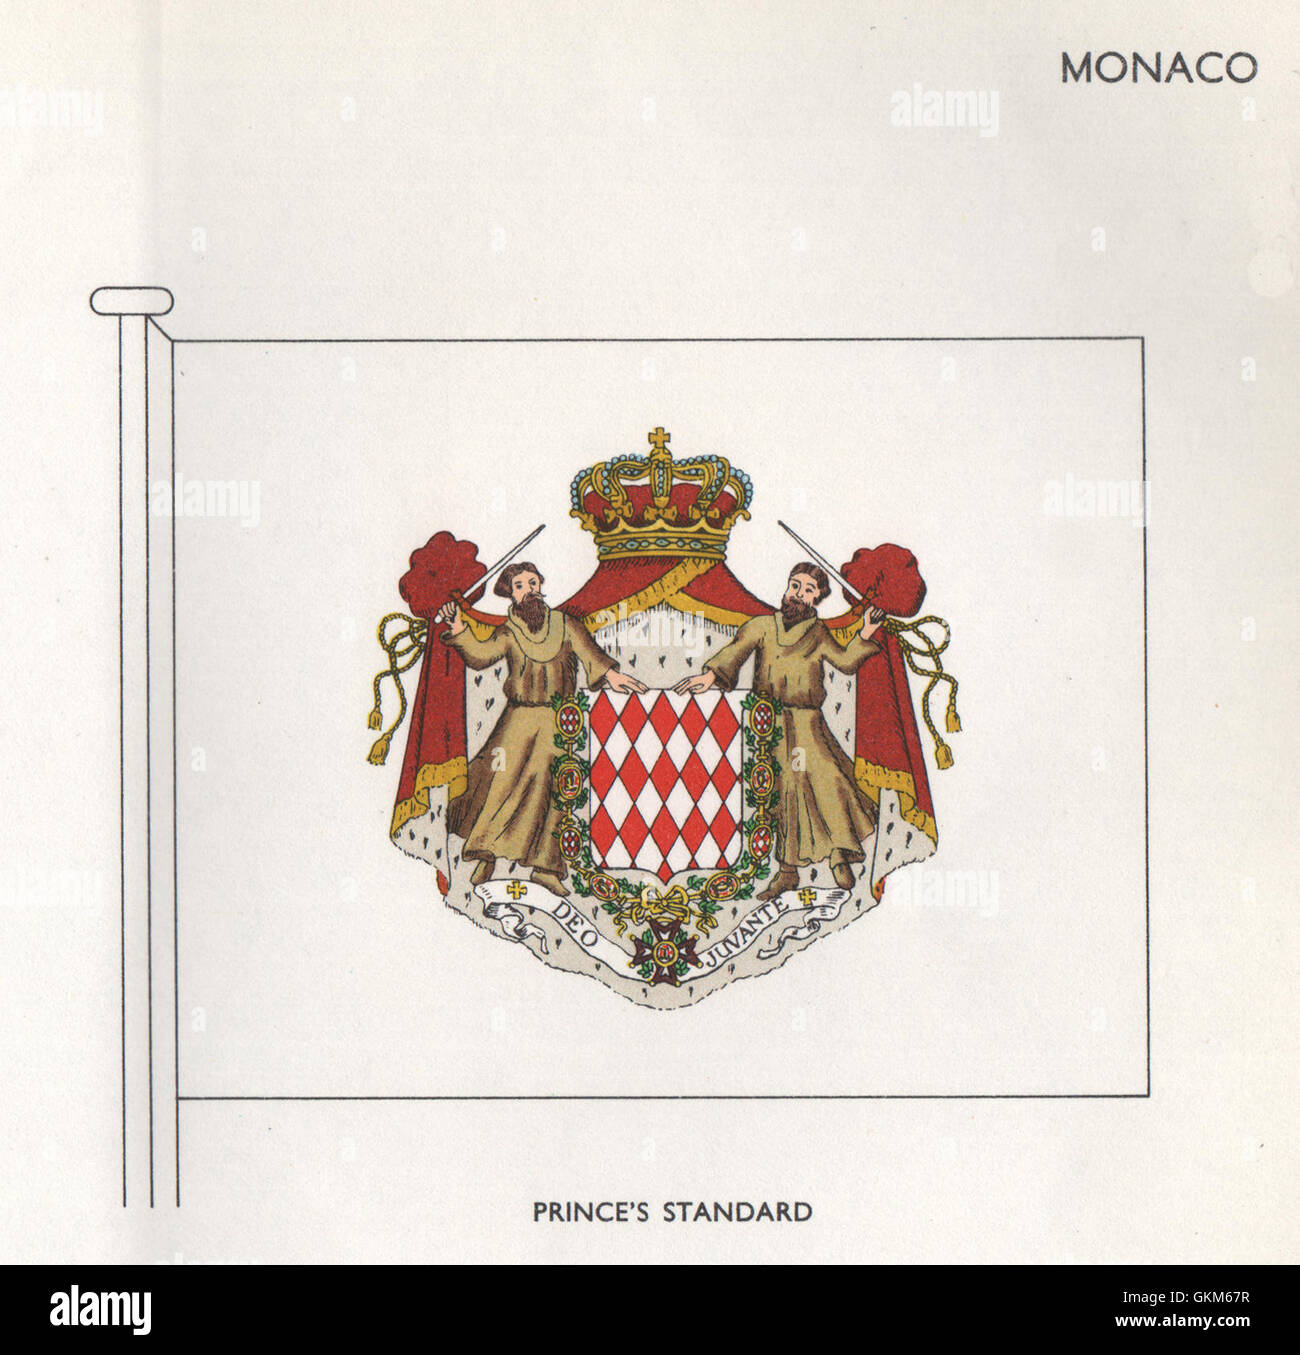 MONACO FLAGS. Prince's Standard, vintage print 1958 Stock Photo